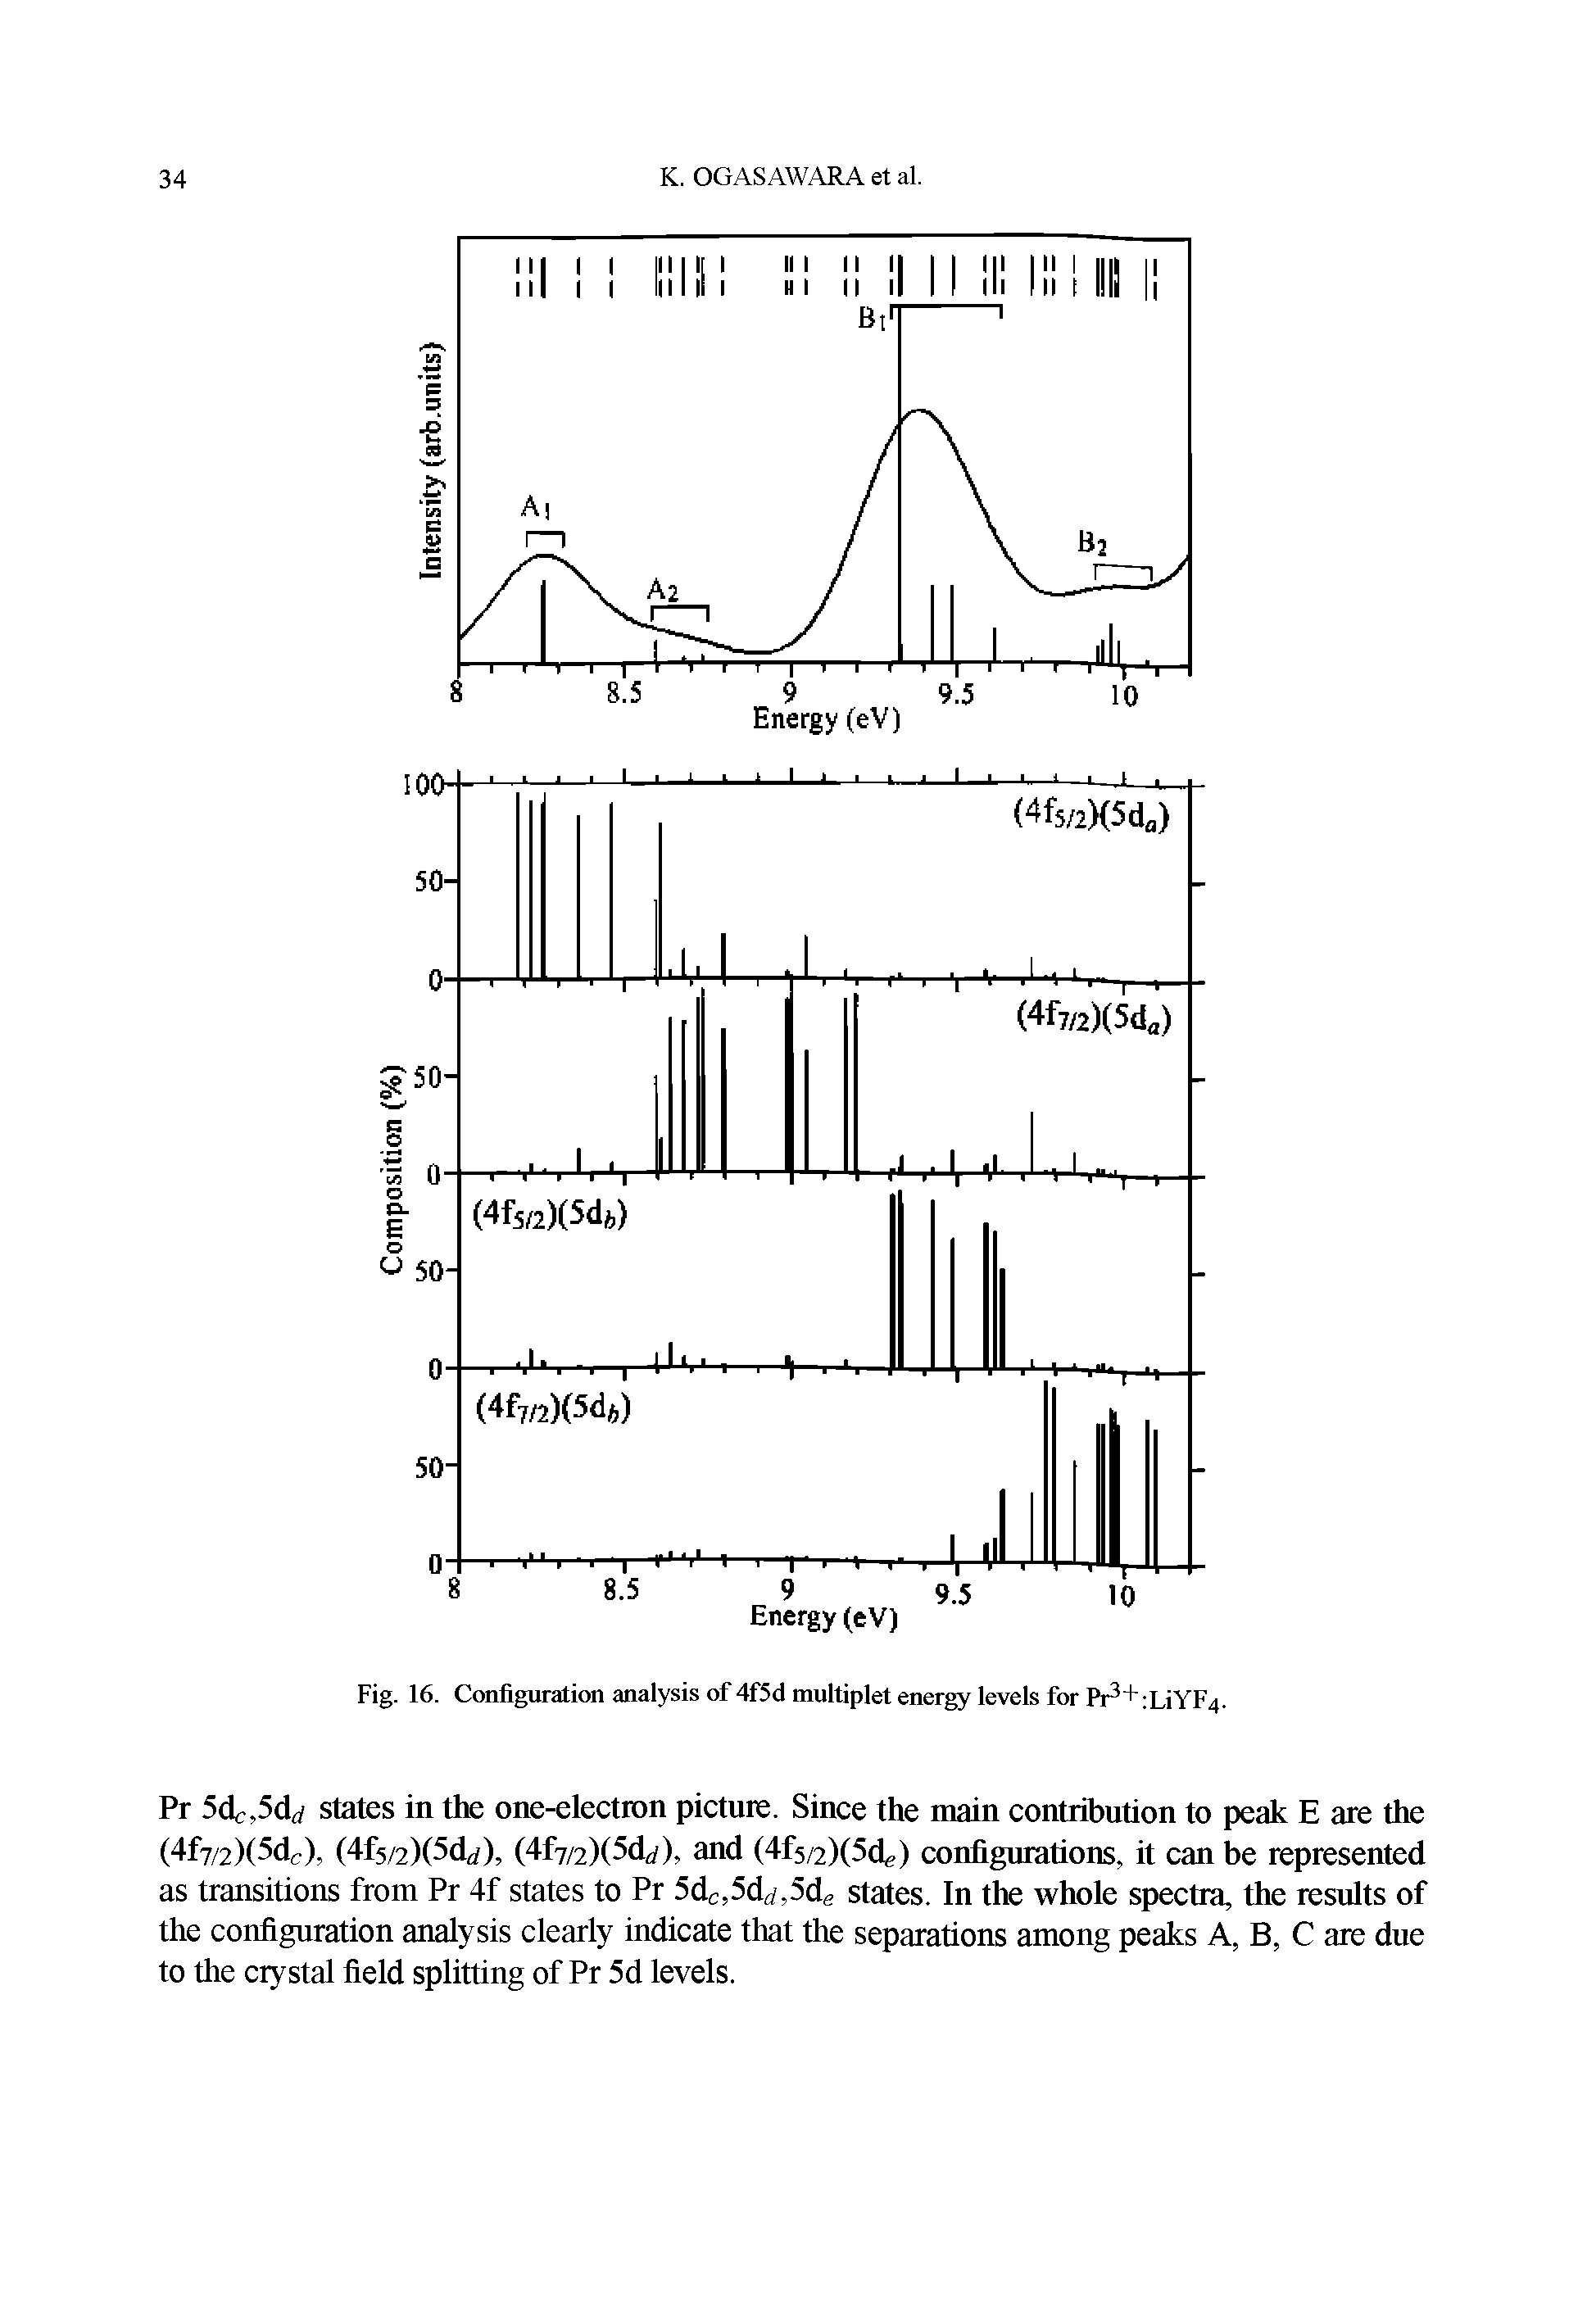 Fig. 16. Configuration analysis of 4f5d multiplet energy levels for Pr3+ LiYF4.